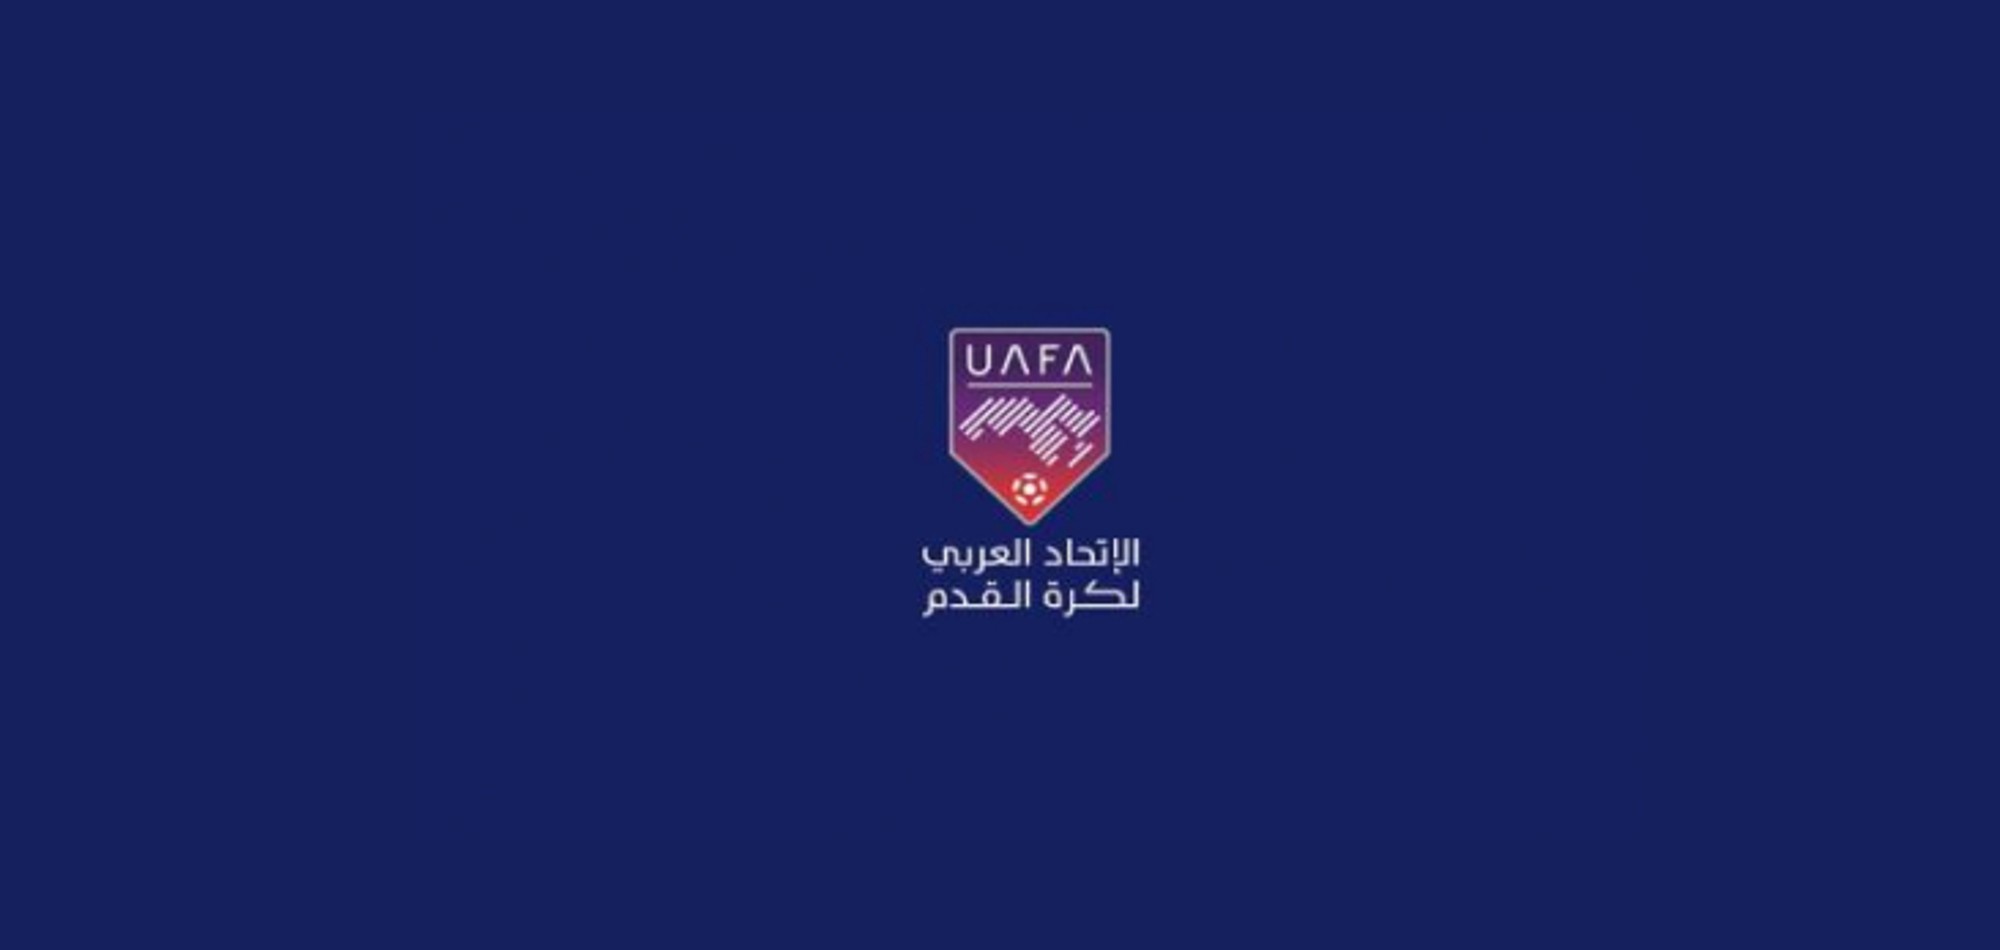 UAFA affirms support for FIFA World Cup Qatar 2022, rejects suspicious propaganda